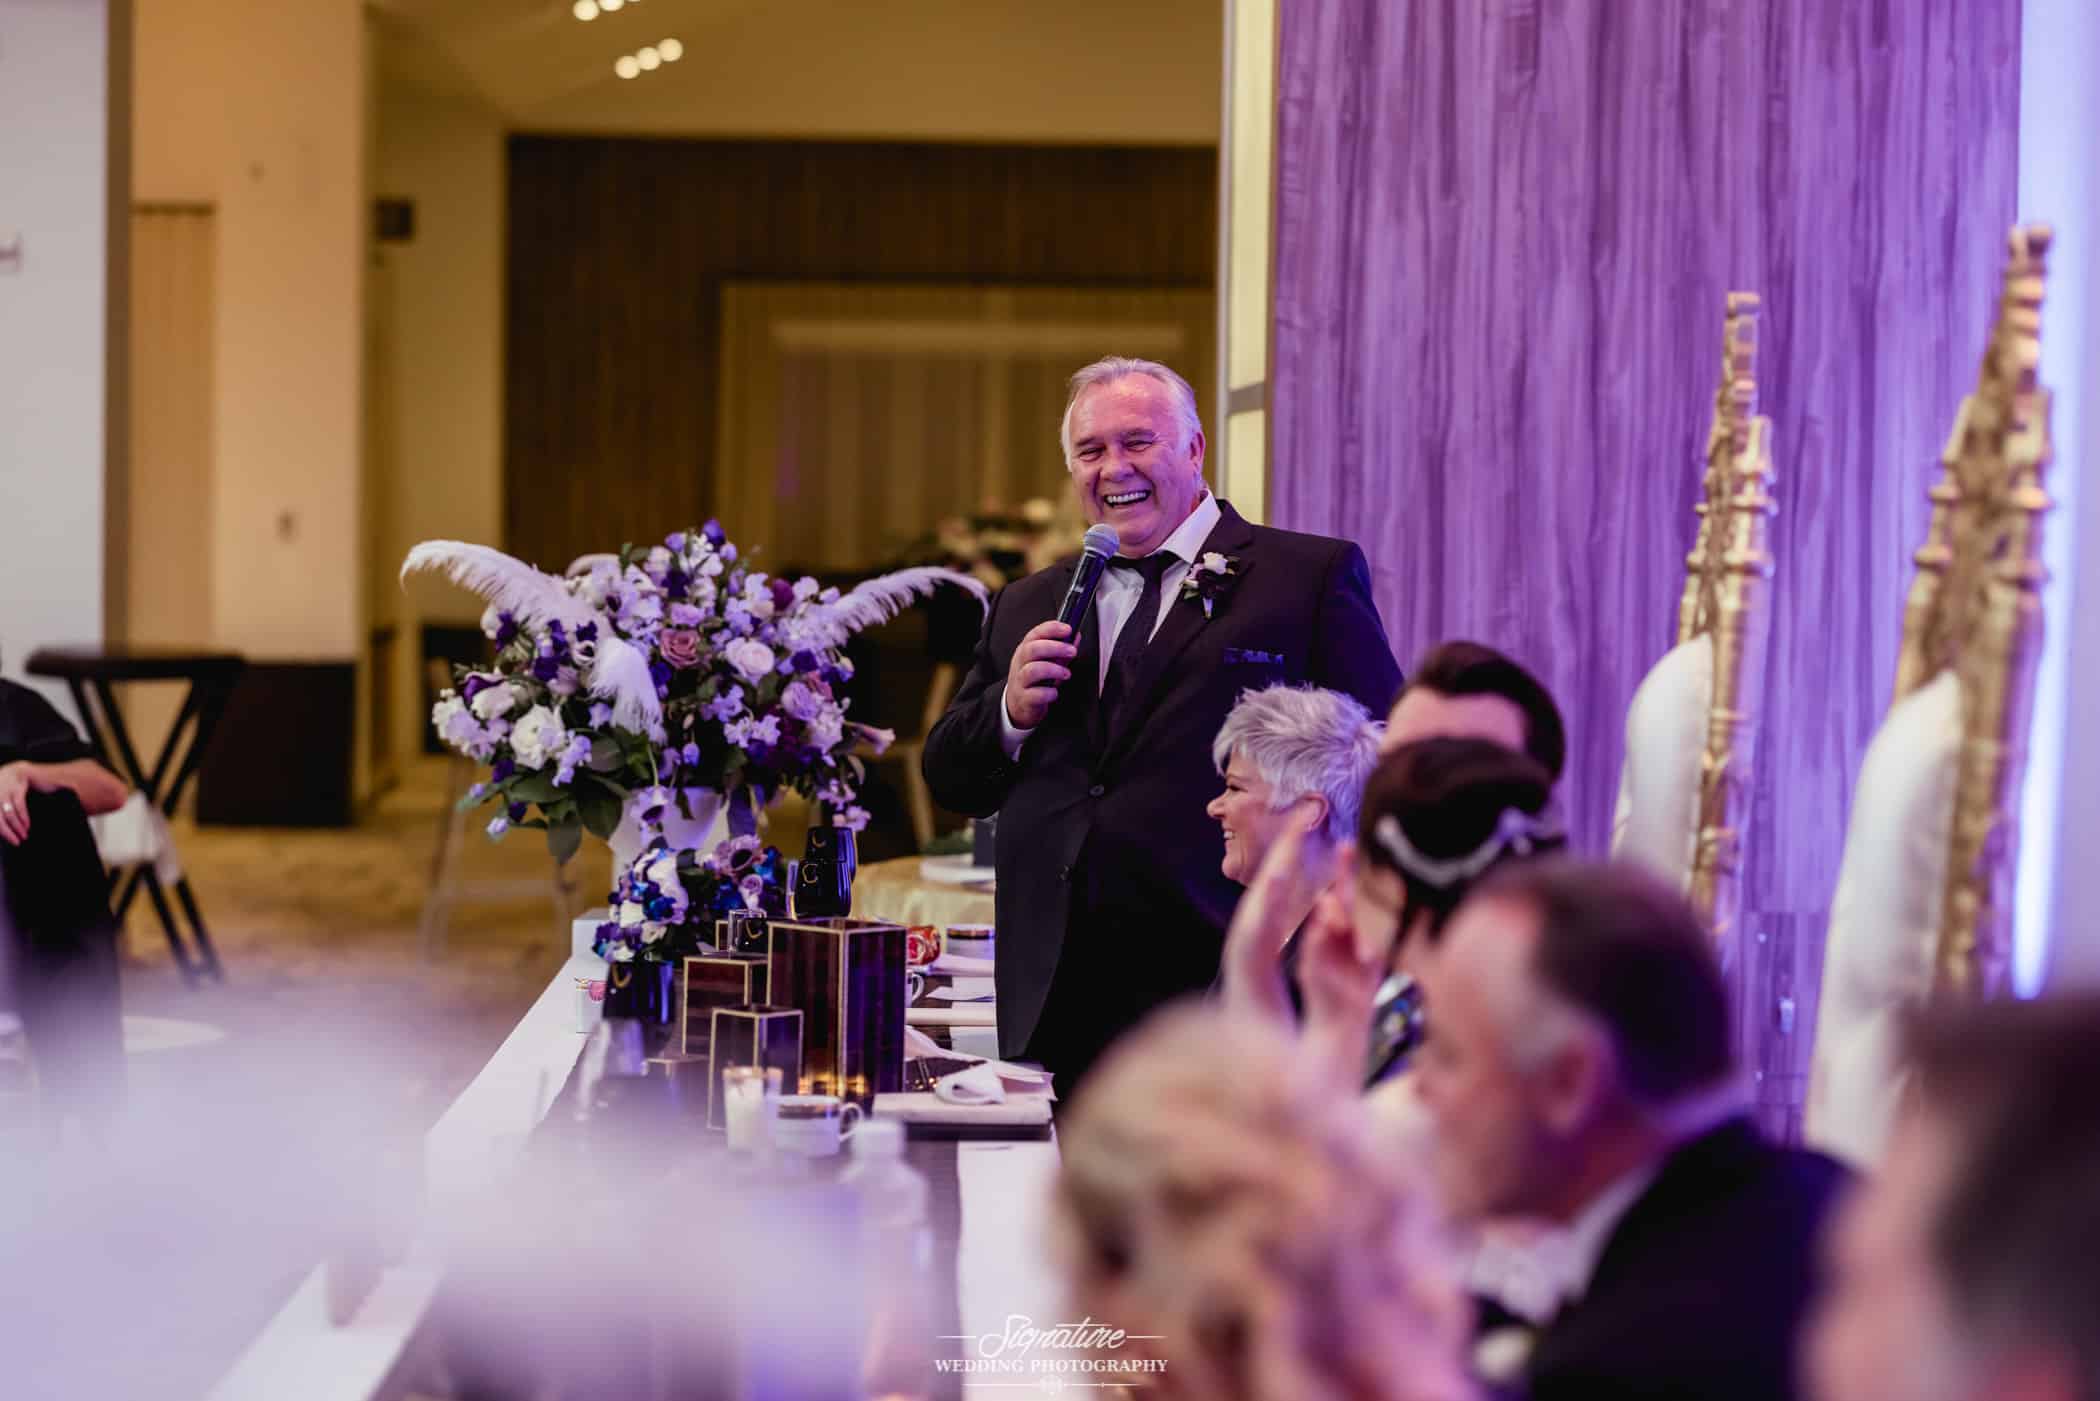 Speech at wedding reception